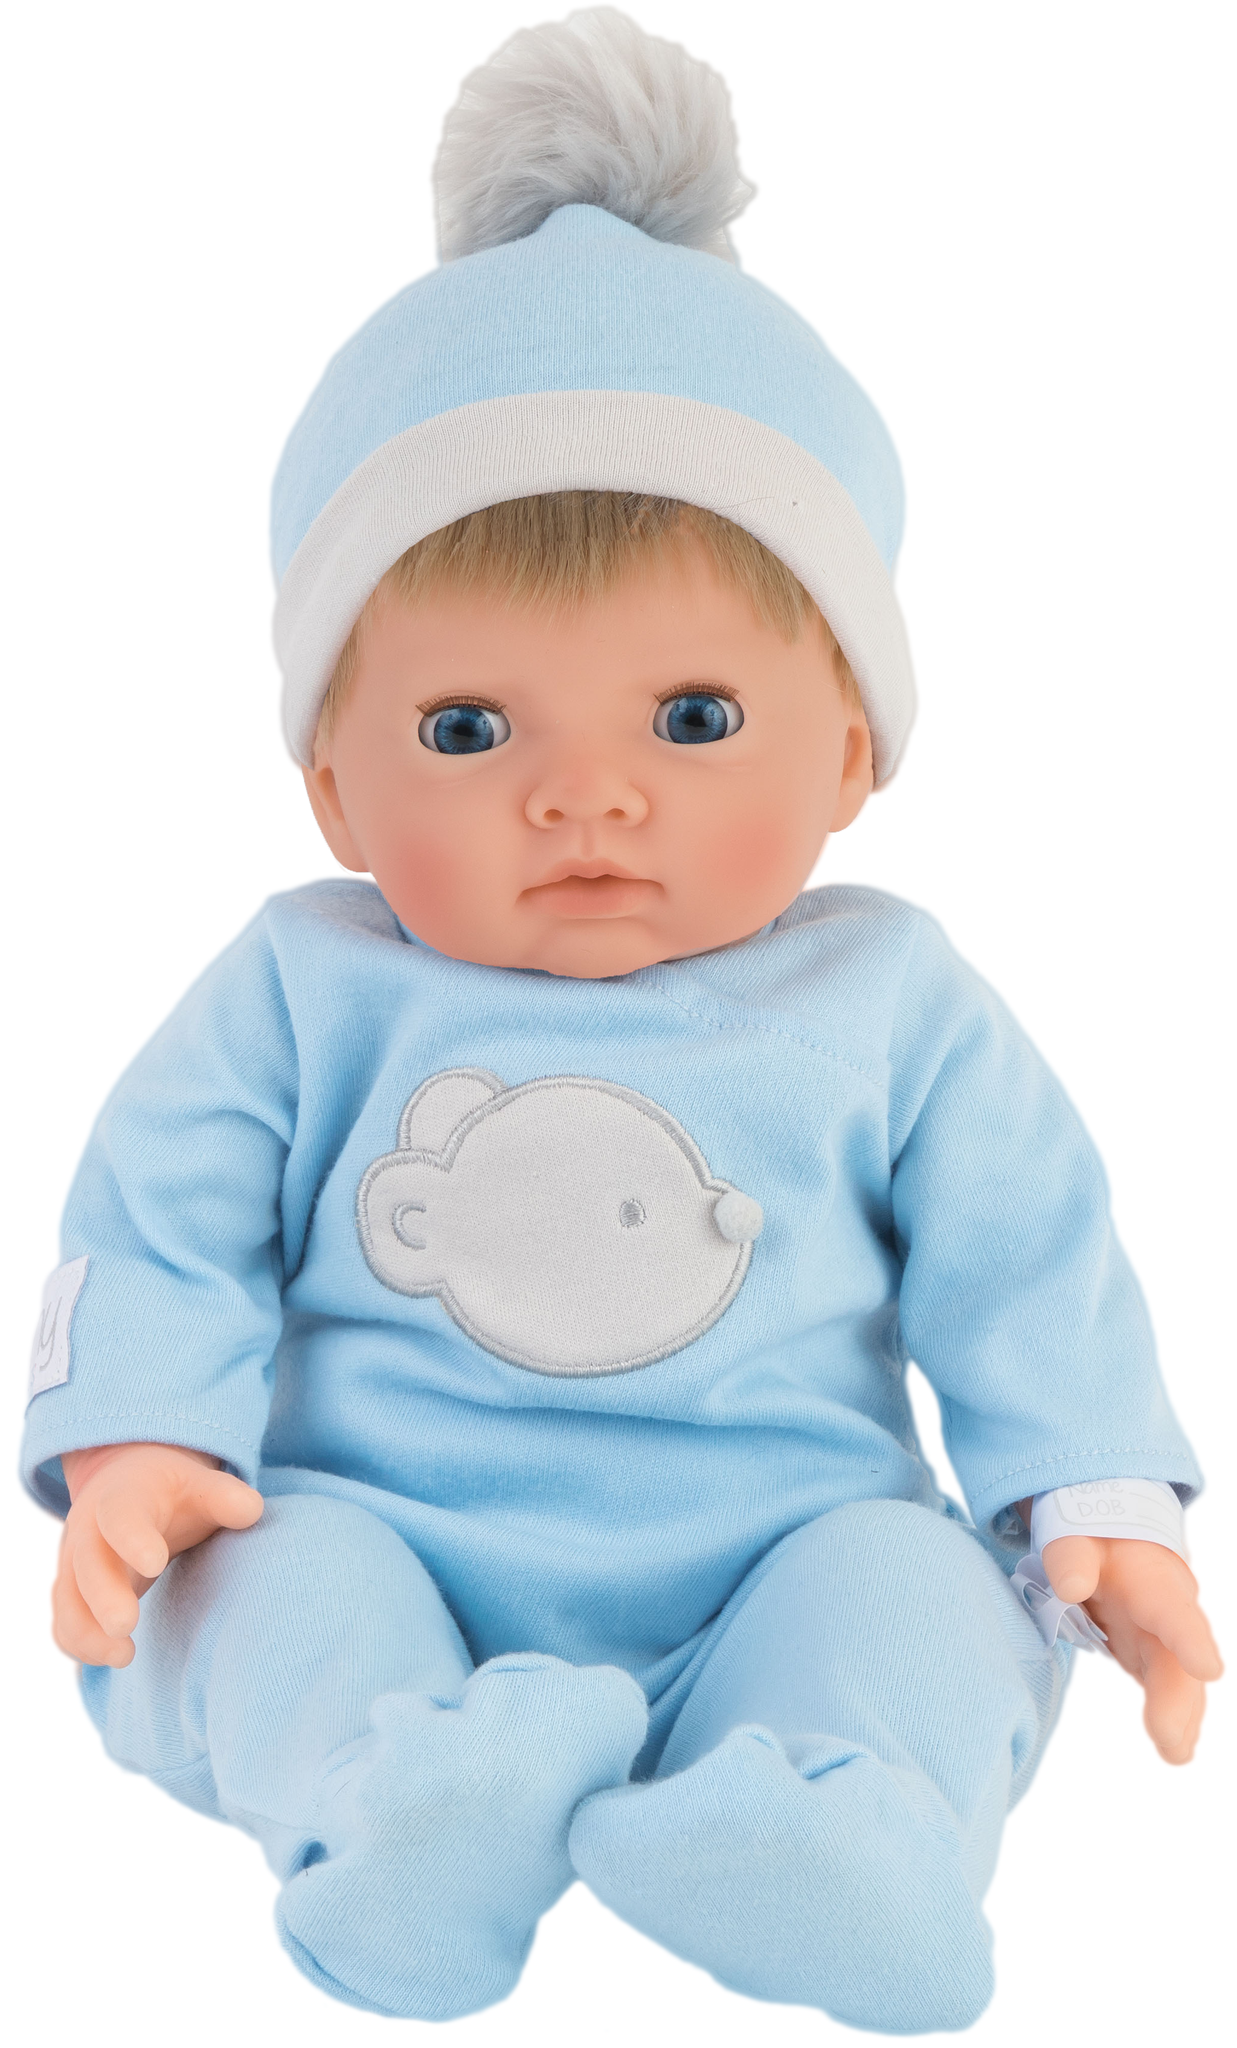 Tiny Treasure - Doll w/ Blond Hair & Blue Bear Outfit (30139)